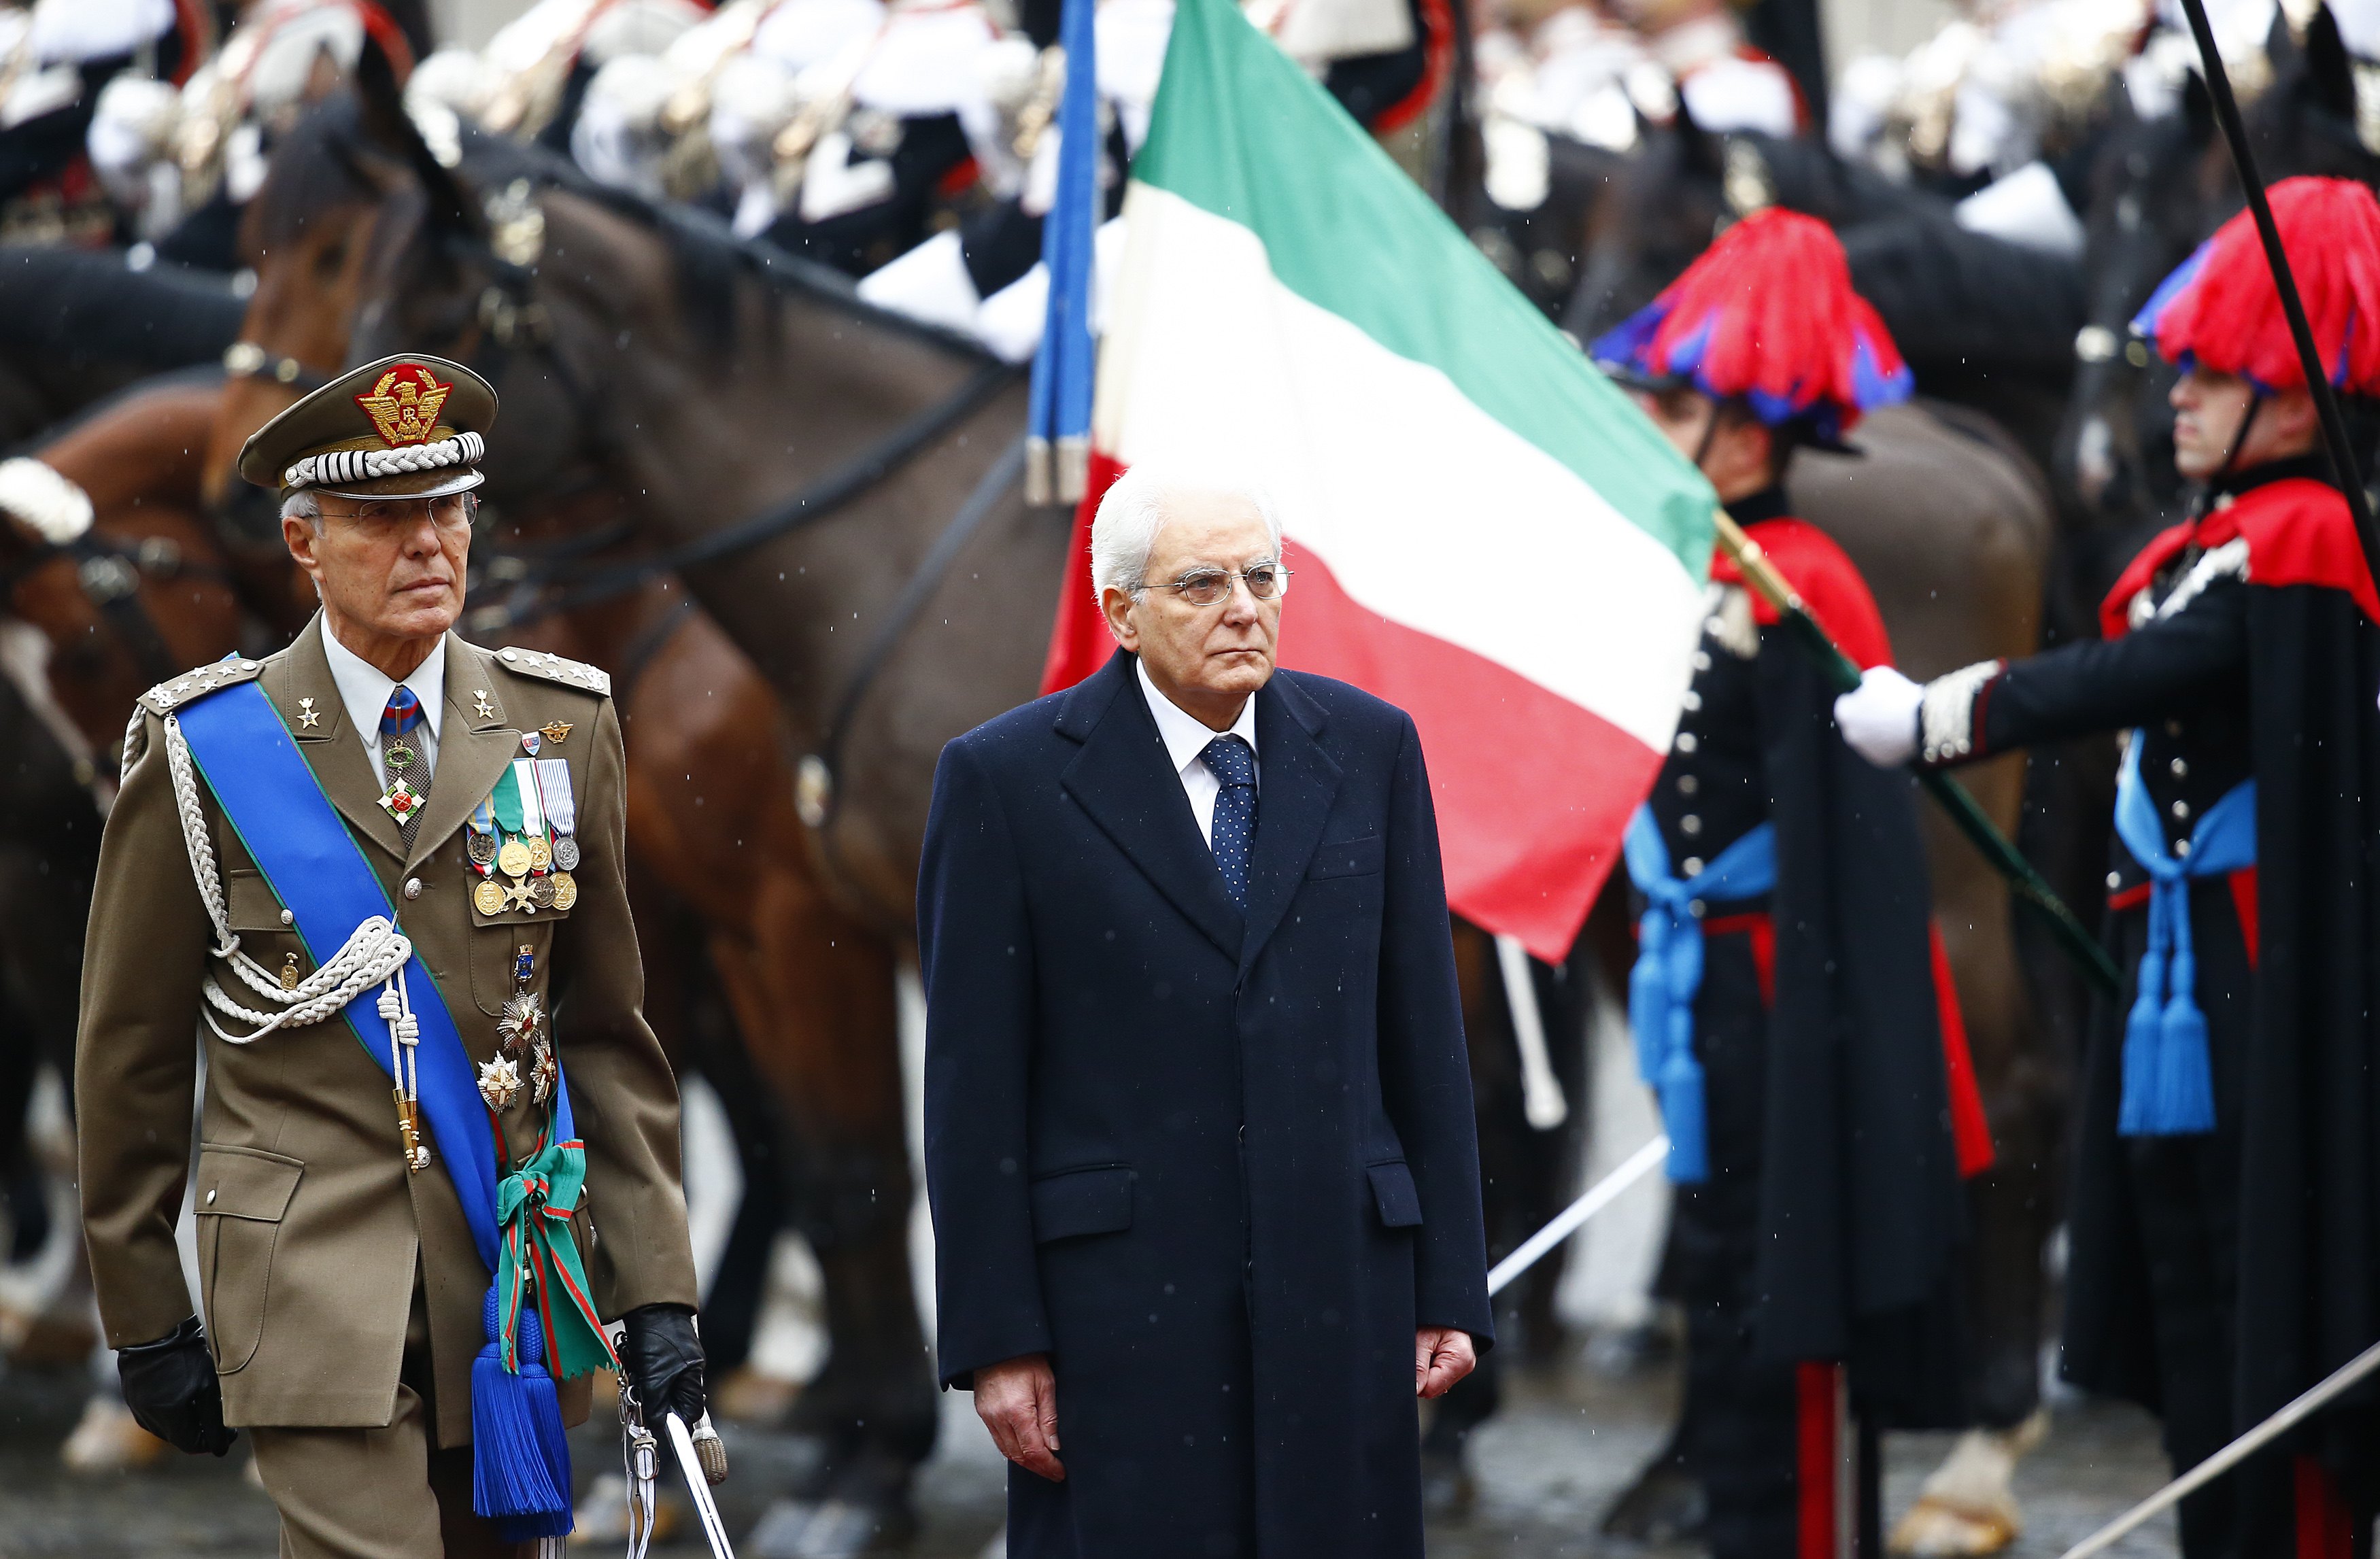 Italy's new President Sergio Mattarella inspects a guard of honour